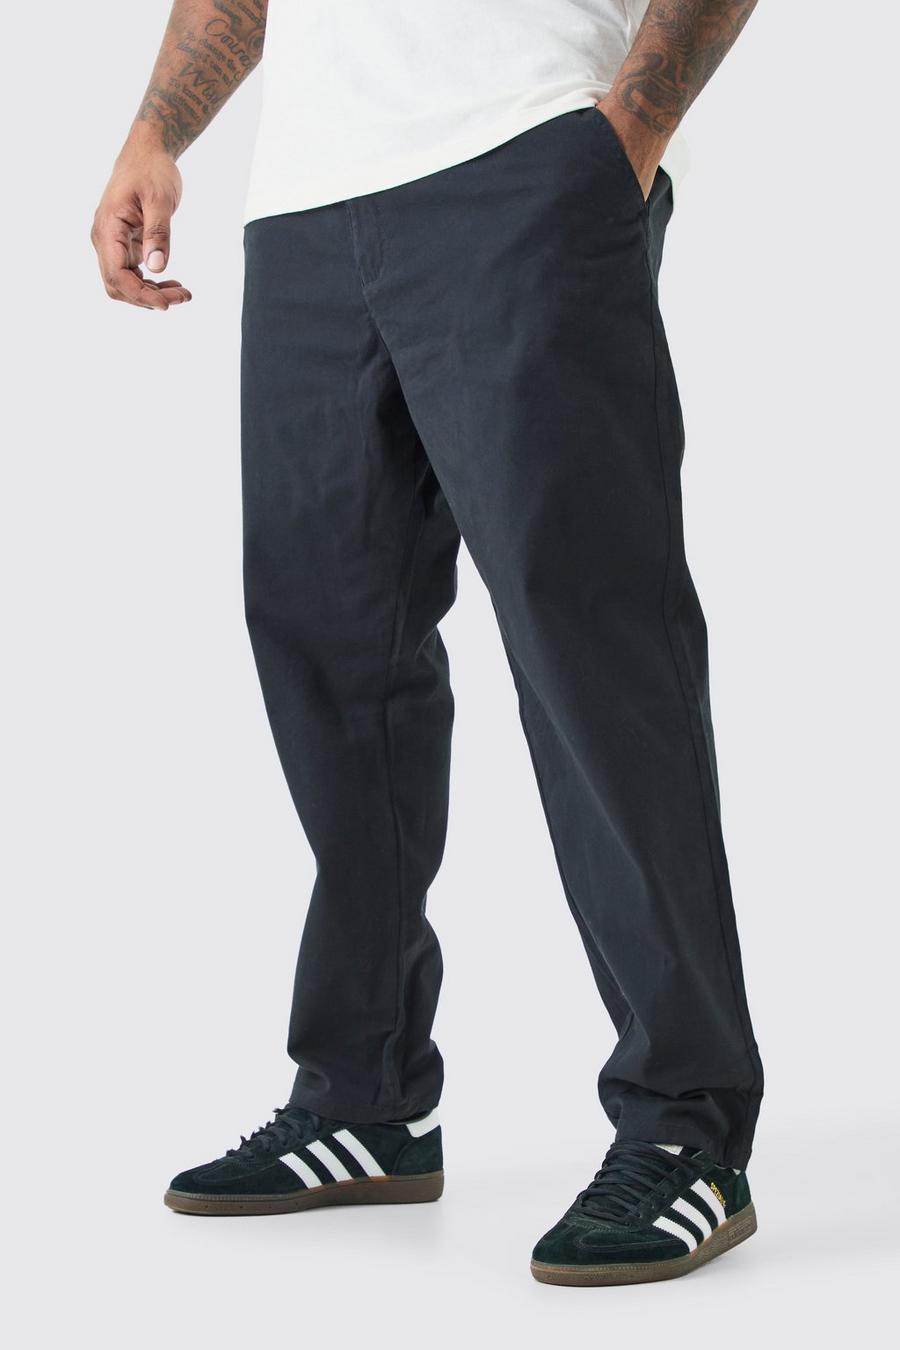 Pantalón Plus chino ajustado con cintura fija, Black